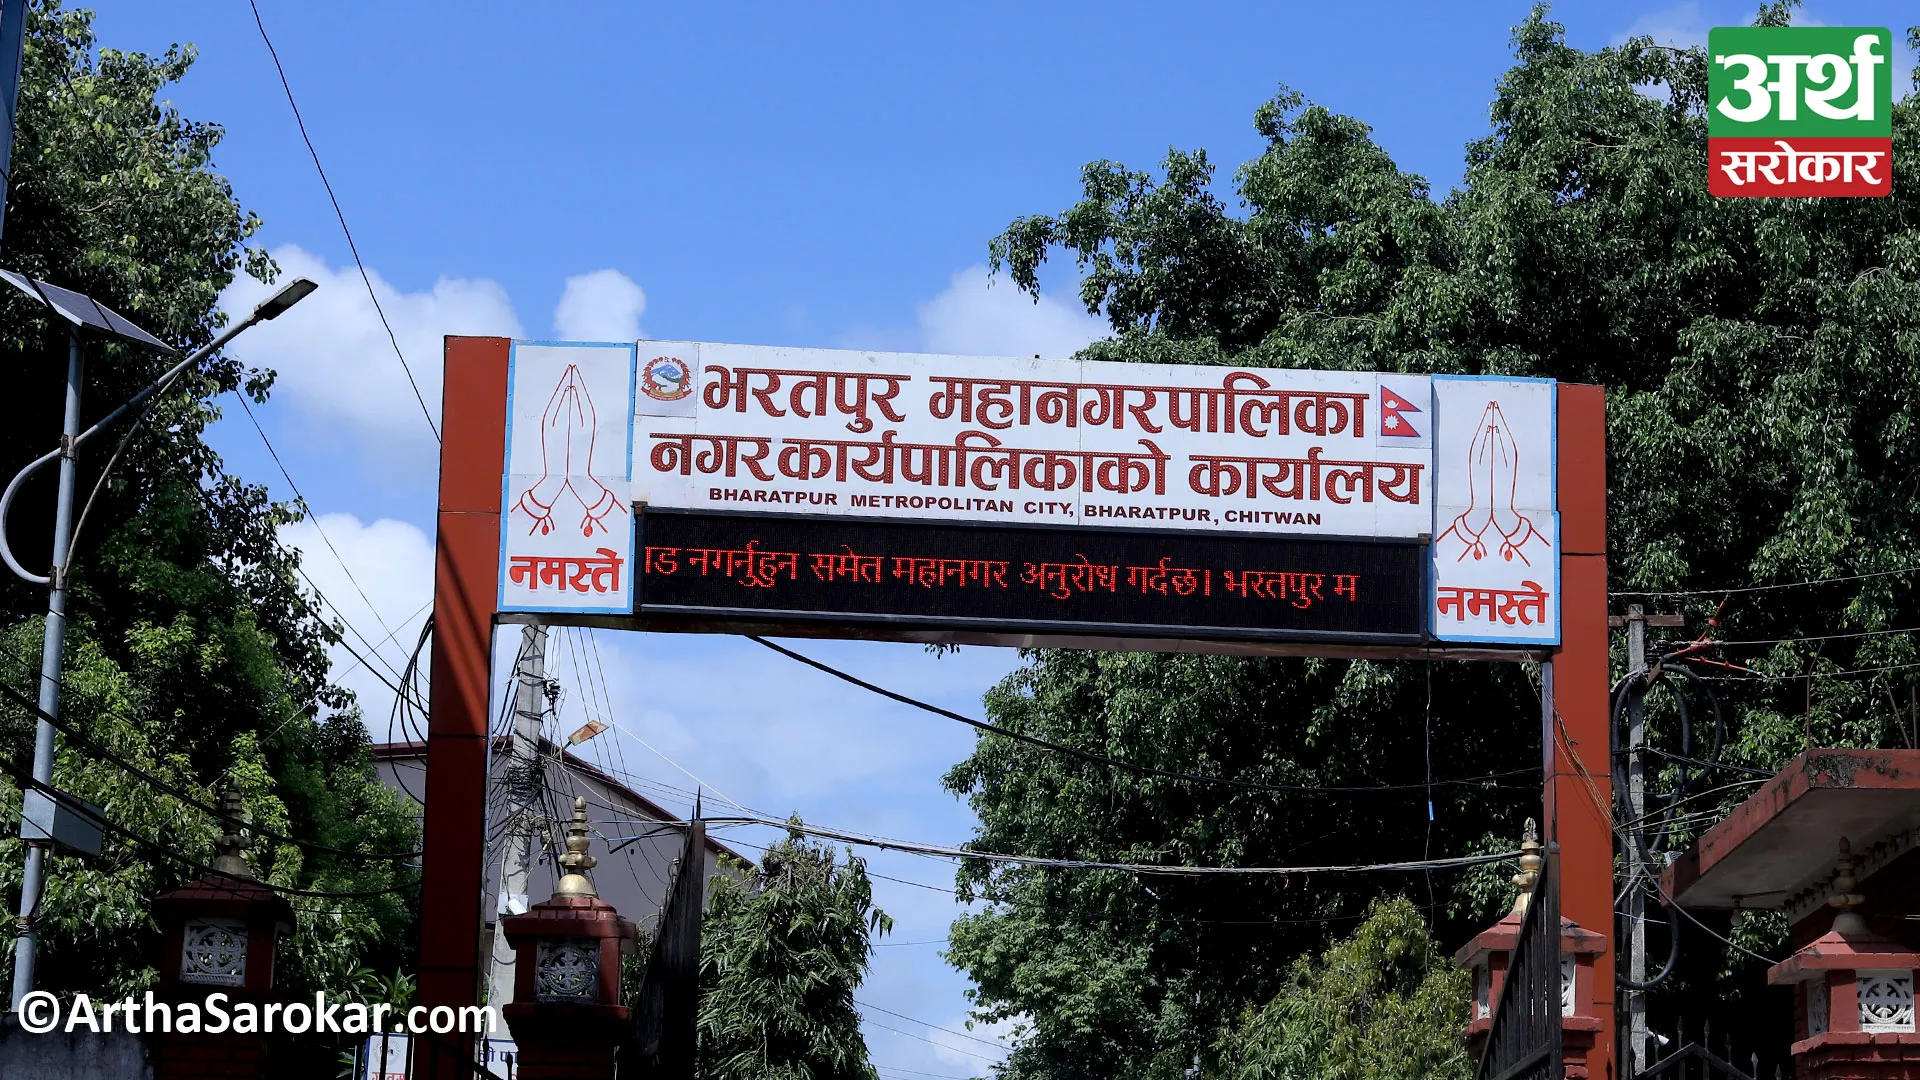 Bharatpur metropolis announced 10 million for the earthquake survivors